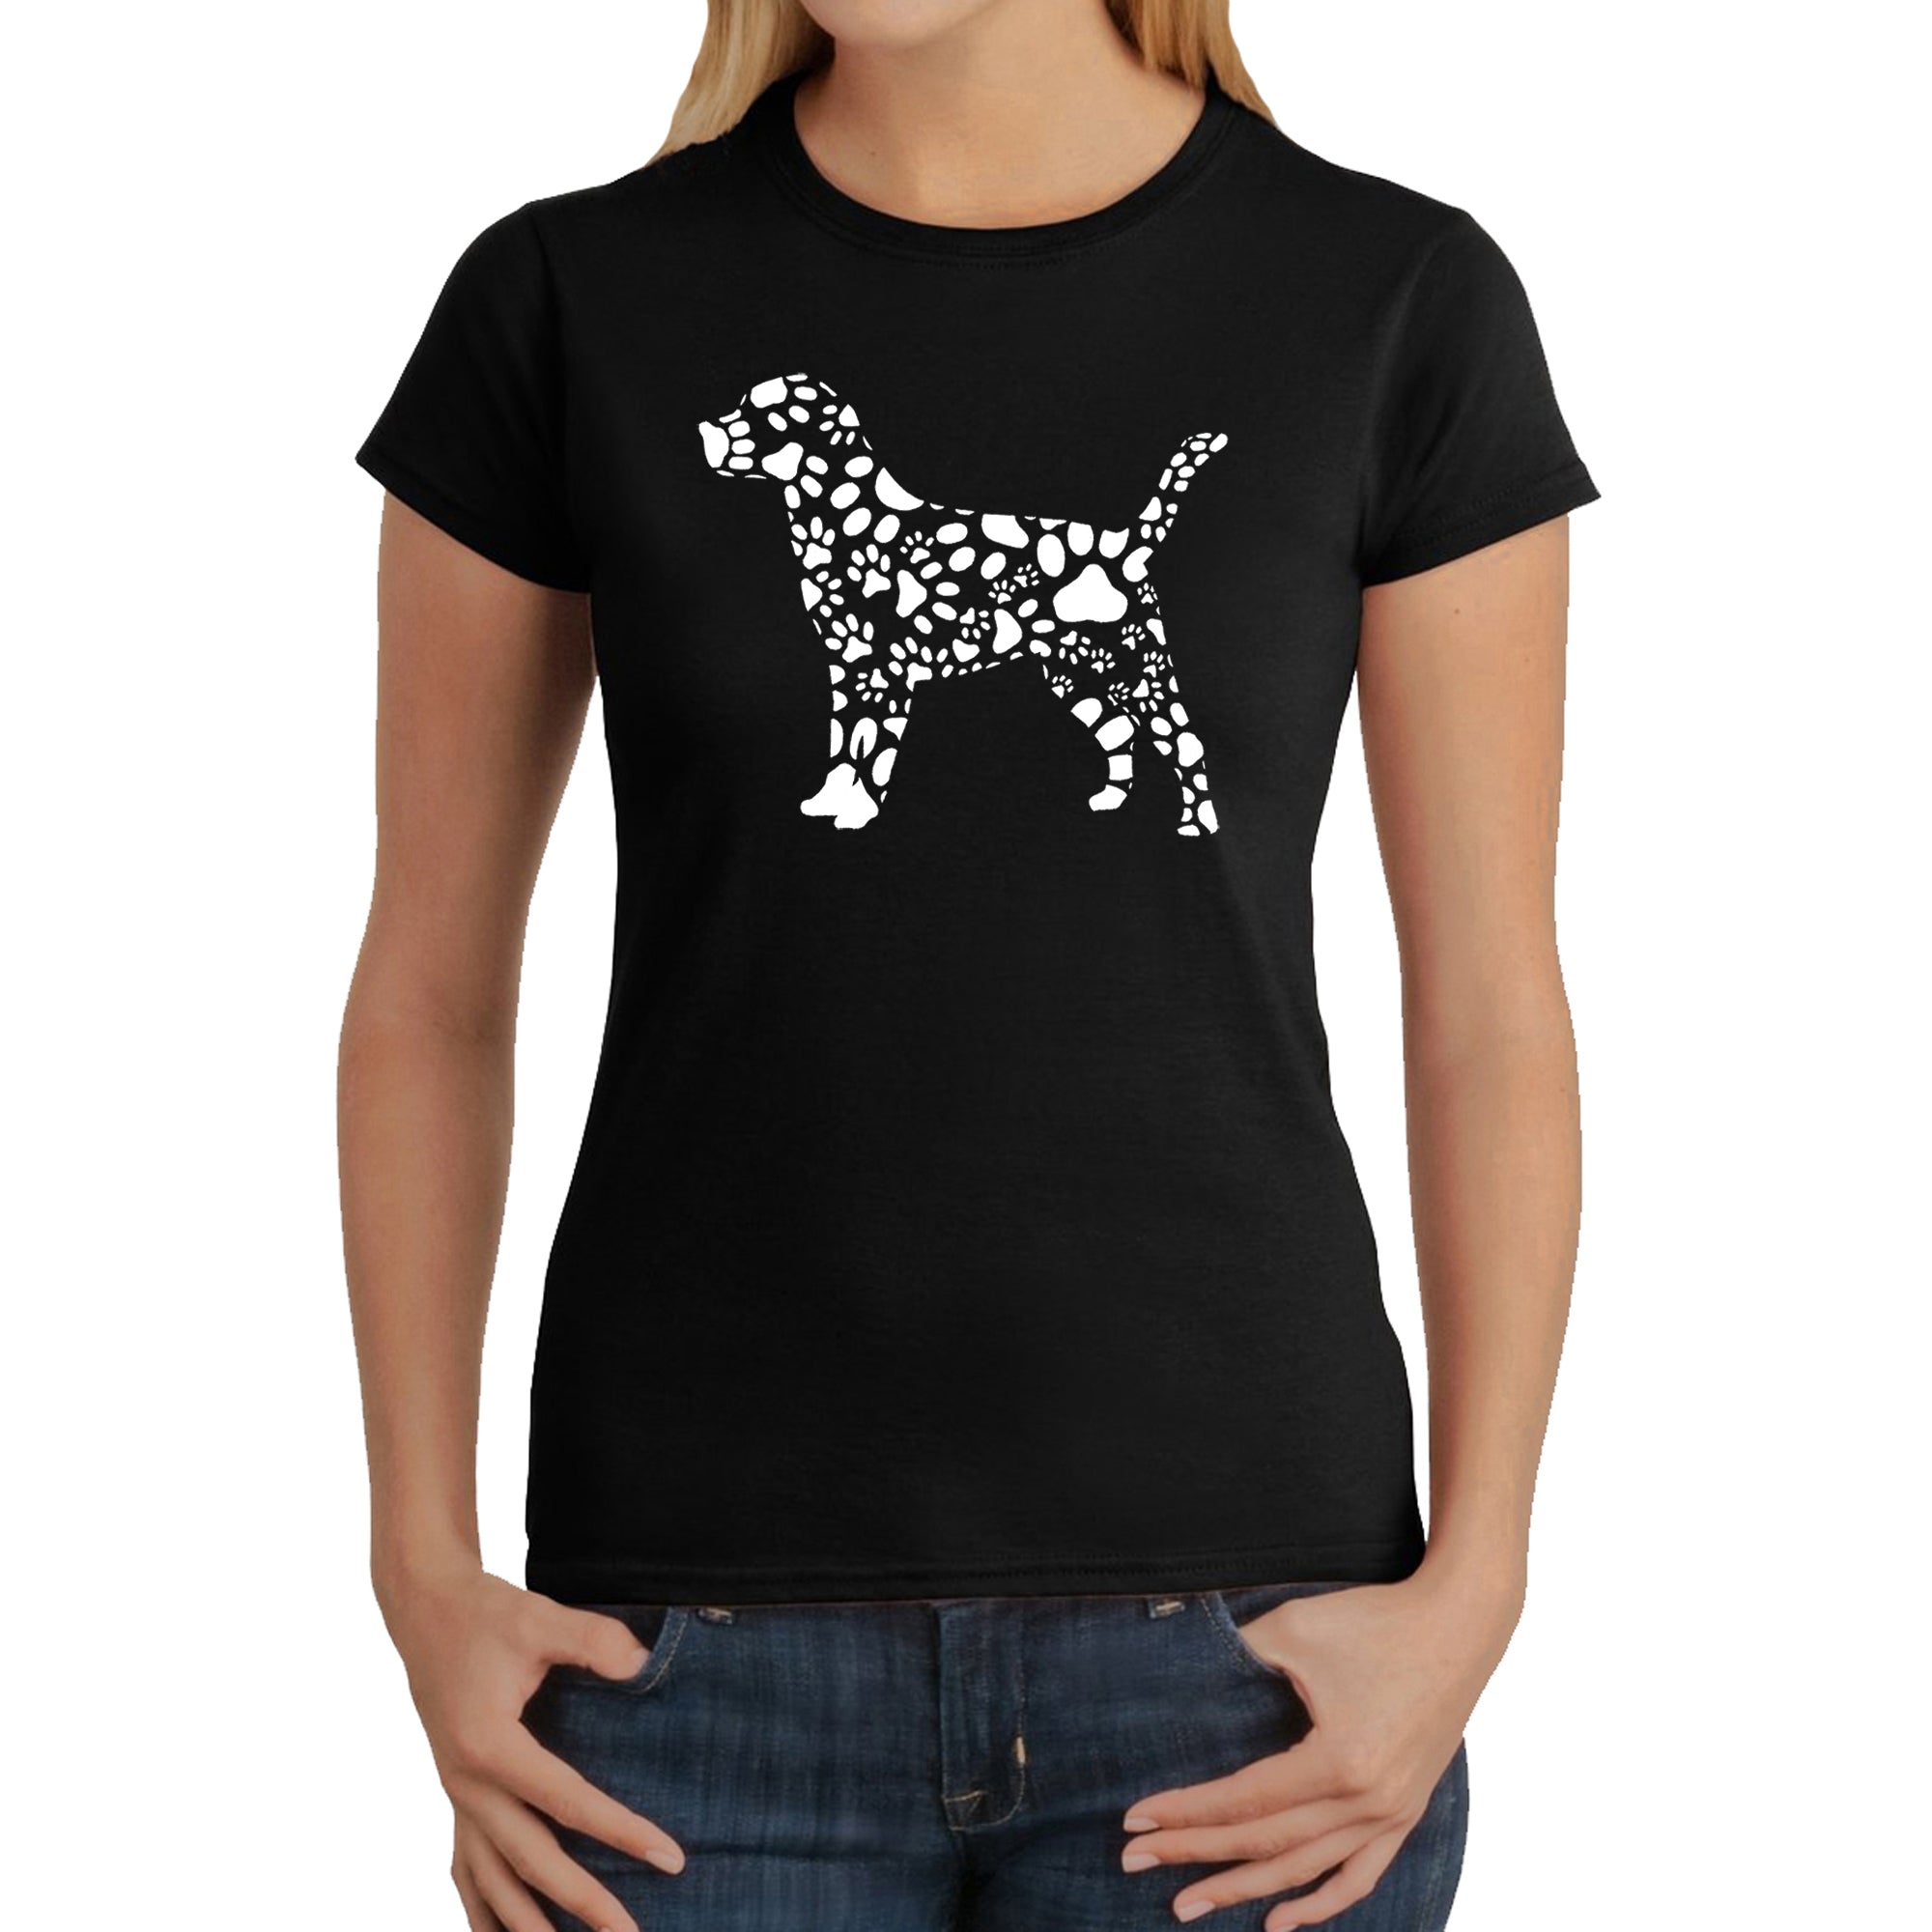 Dog Paw Prints - Women's Word Art T-Shirt - Pink - Small